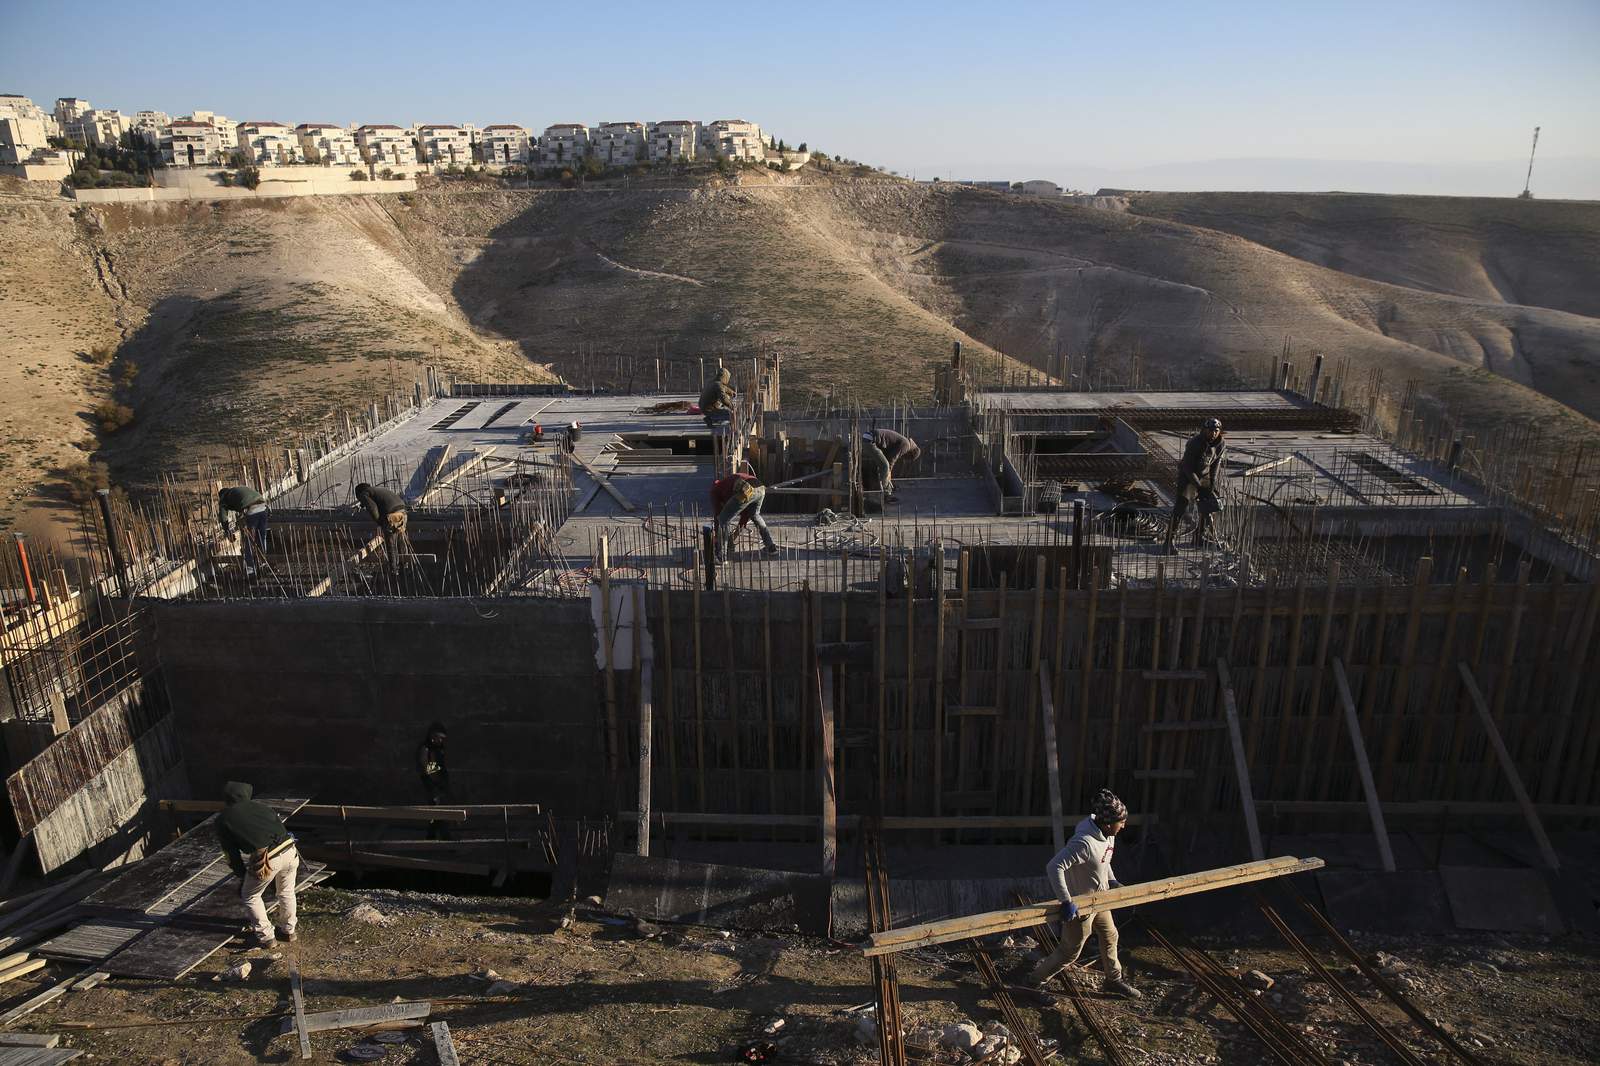 EXPLAINER: Israeli settlements may face new scrutiny